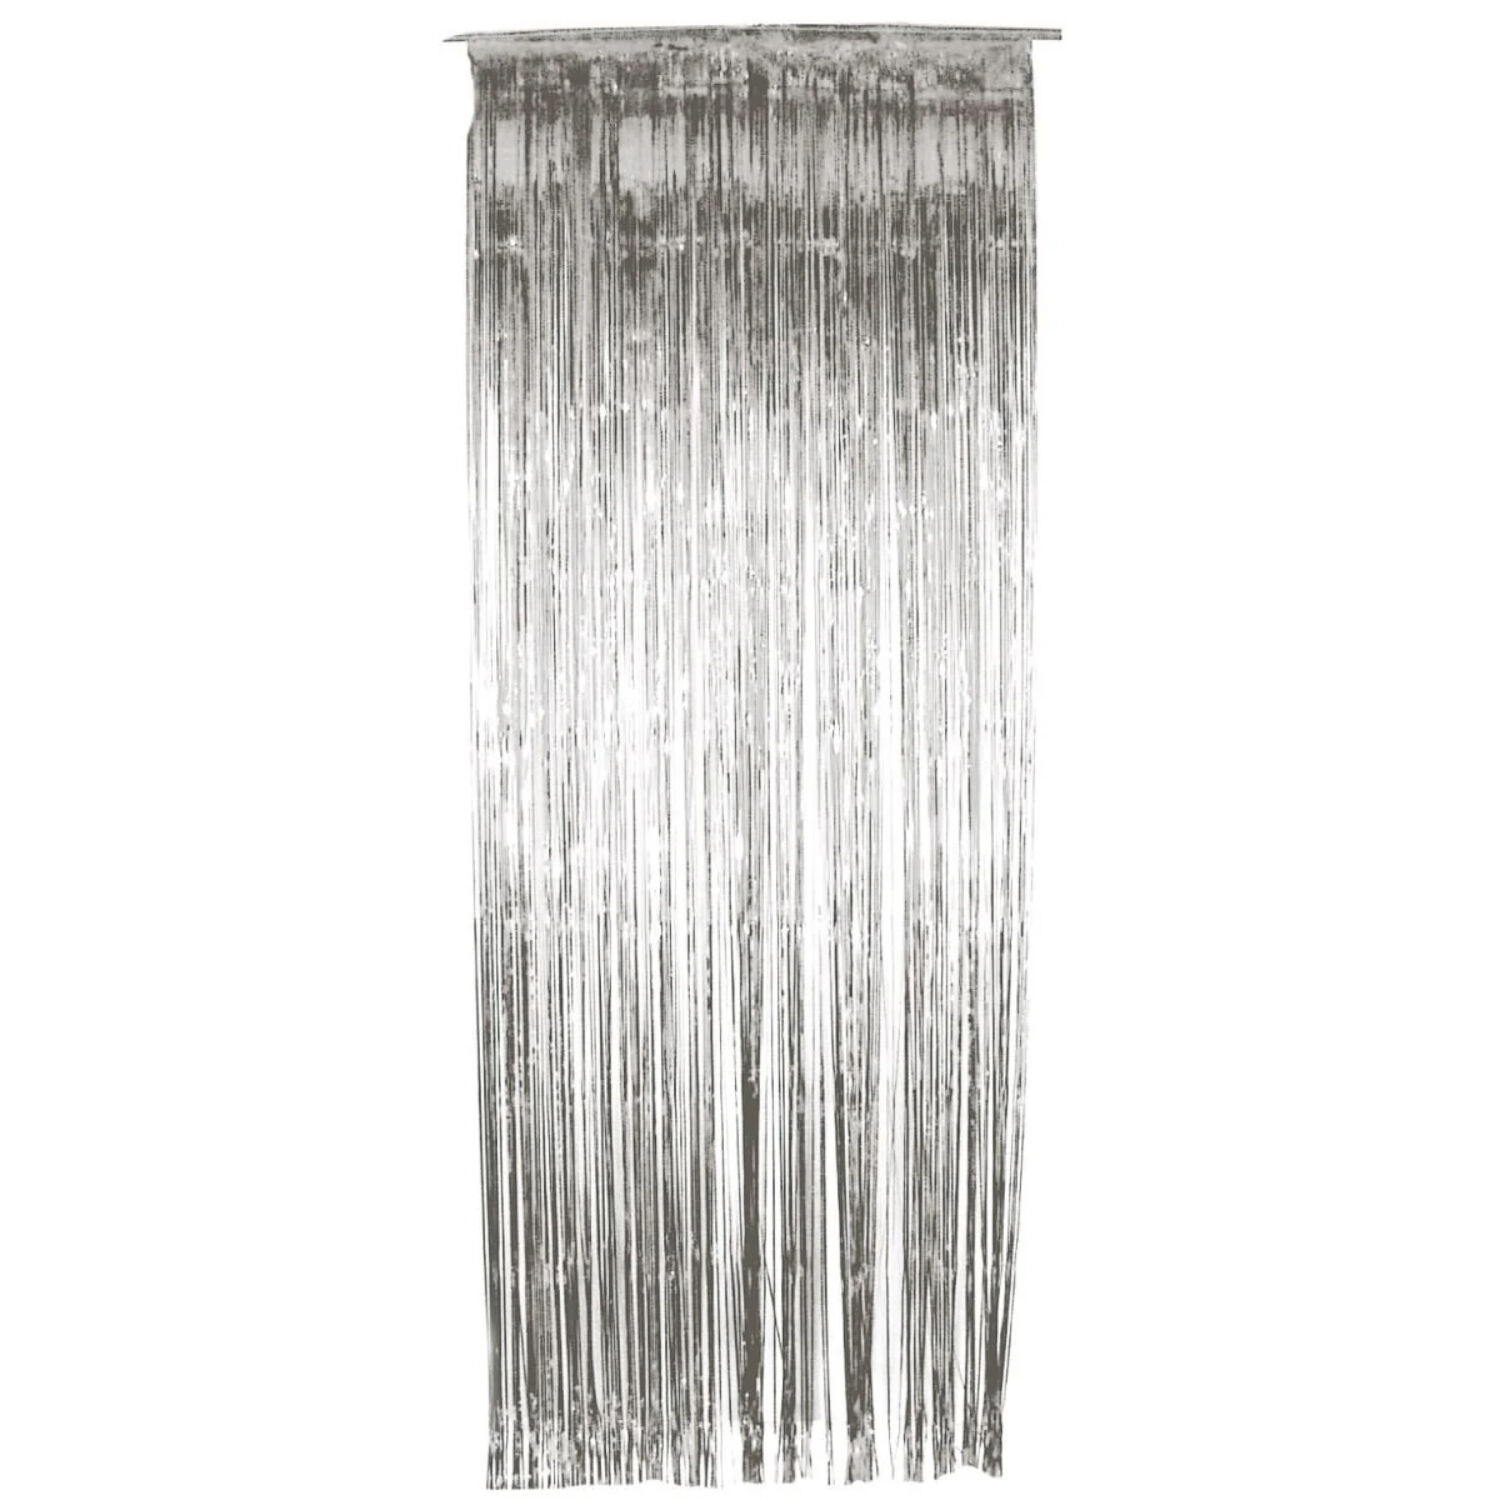 SALE Vorhang Lametta Metallic silber, 244 x 91 cm